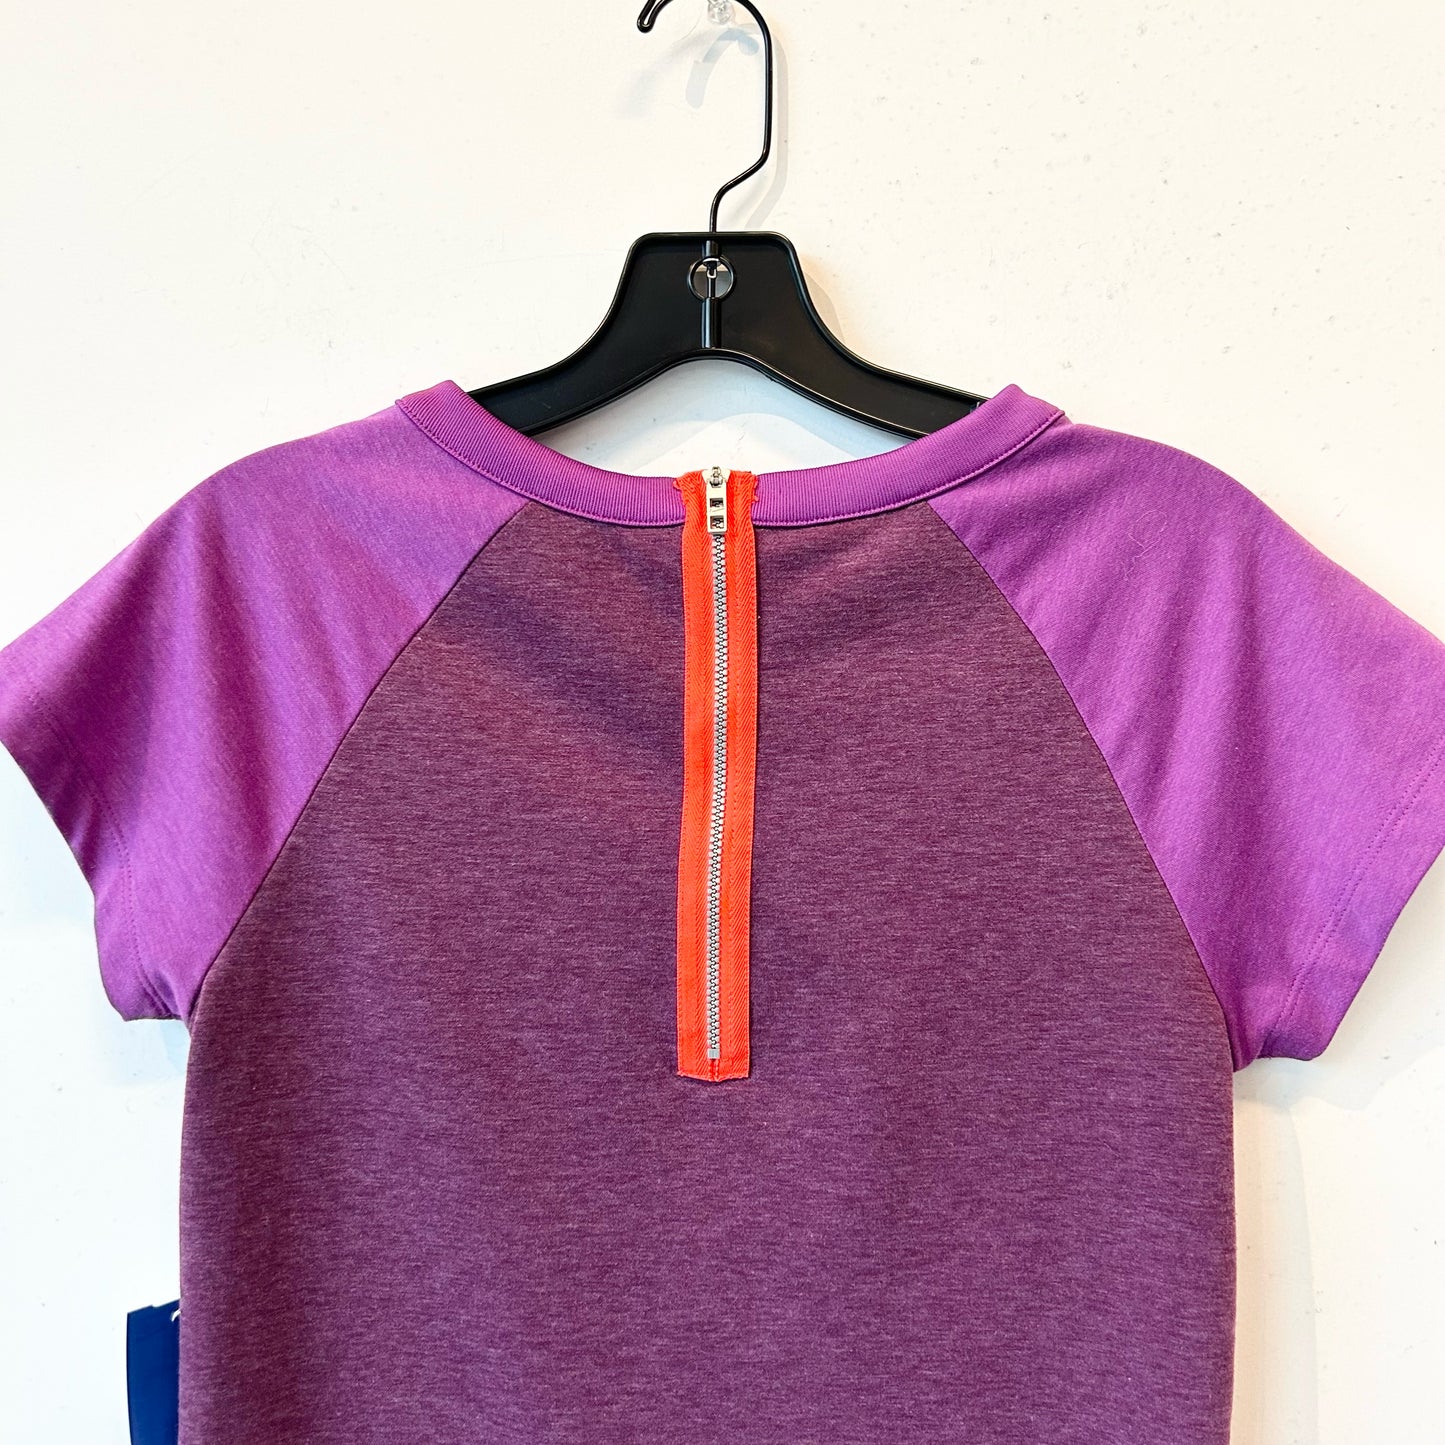 S Nike Purple Golf T-shirt